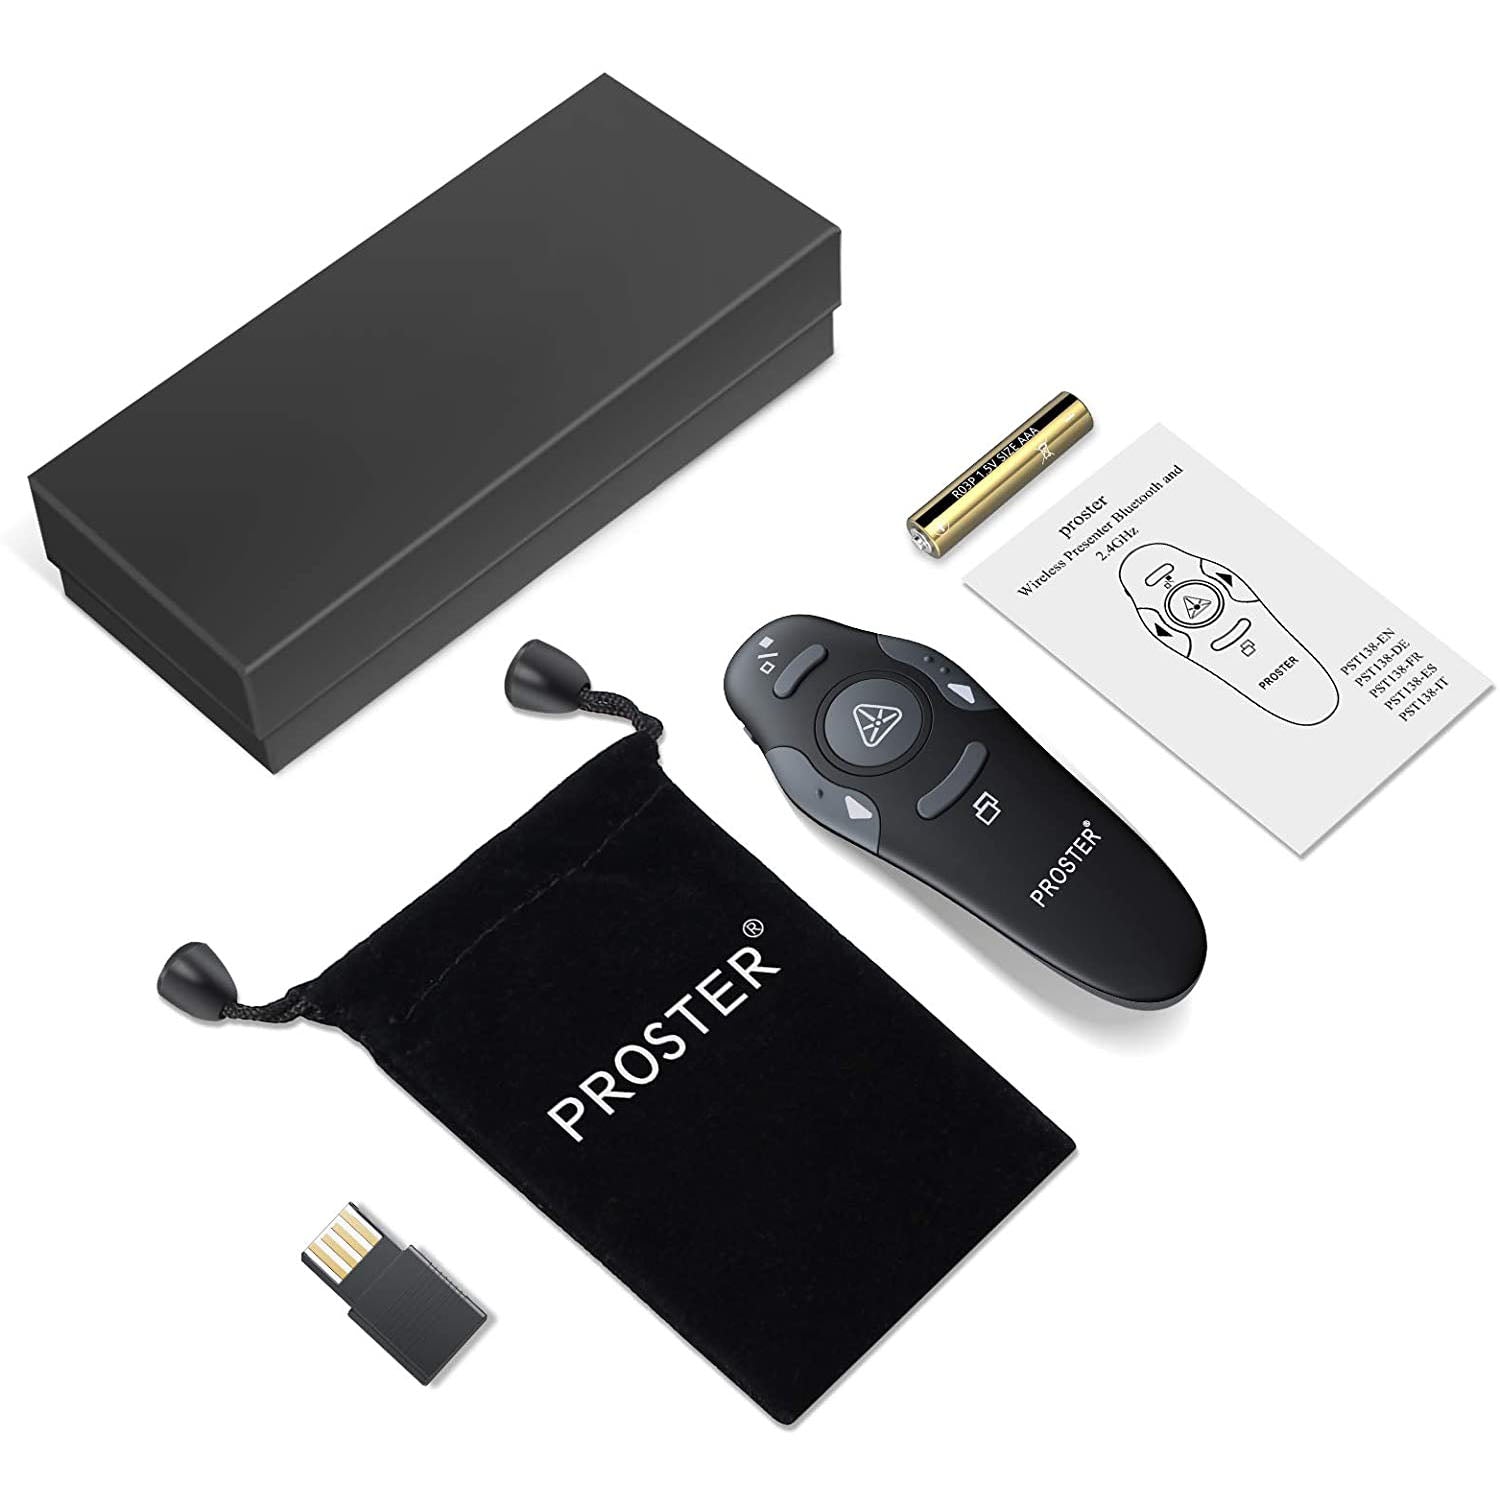 Proster Bluetooth 2.4GHz Wireless USB PowerPoint PPT Presenter